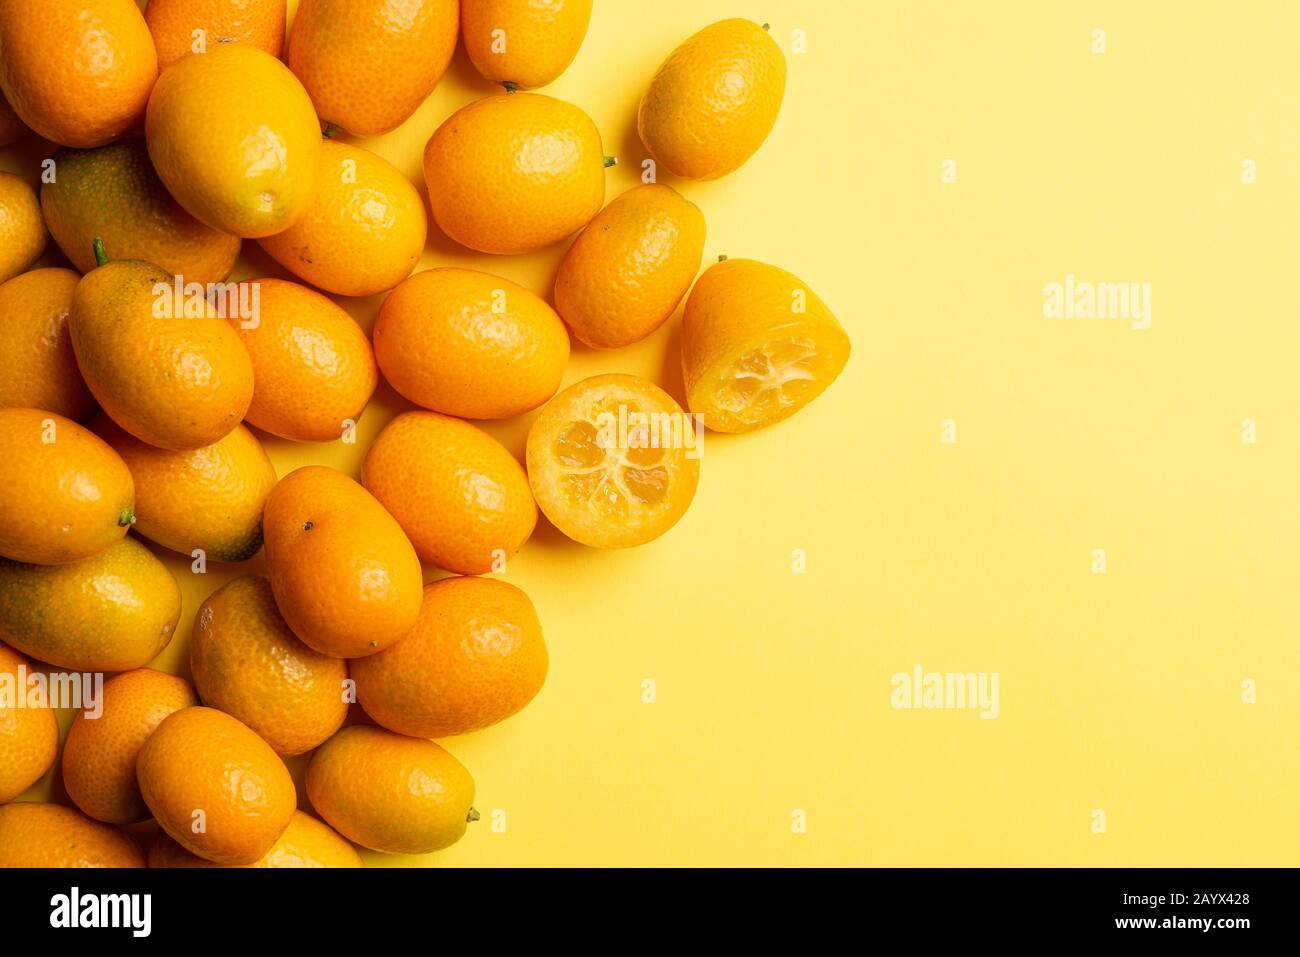 Pile of kumquat fruits, chinese tangerines, on yellow background. Stock Photo